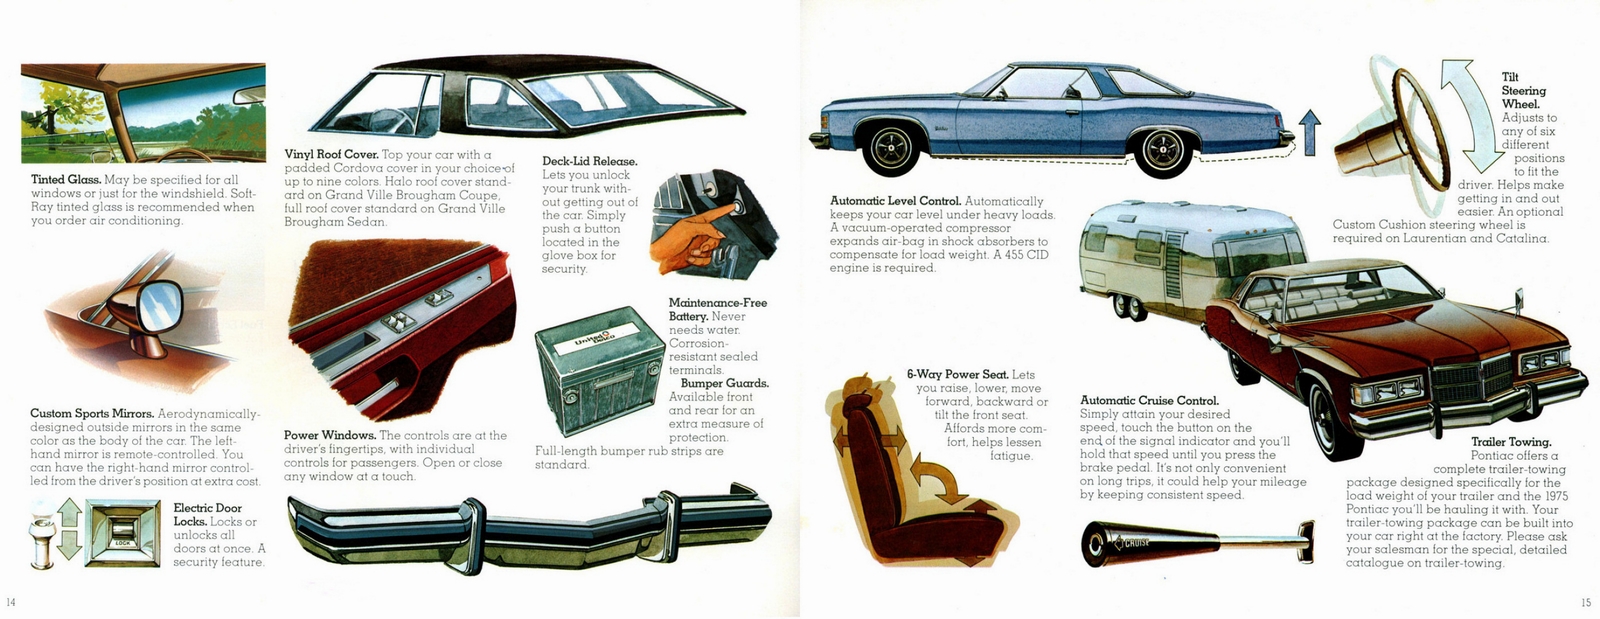 n_1975 Pontiac Full Size (Cdn)-14-15.jpg